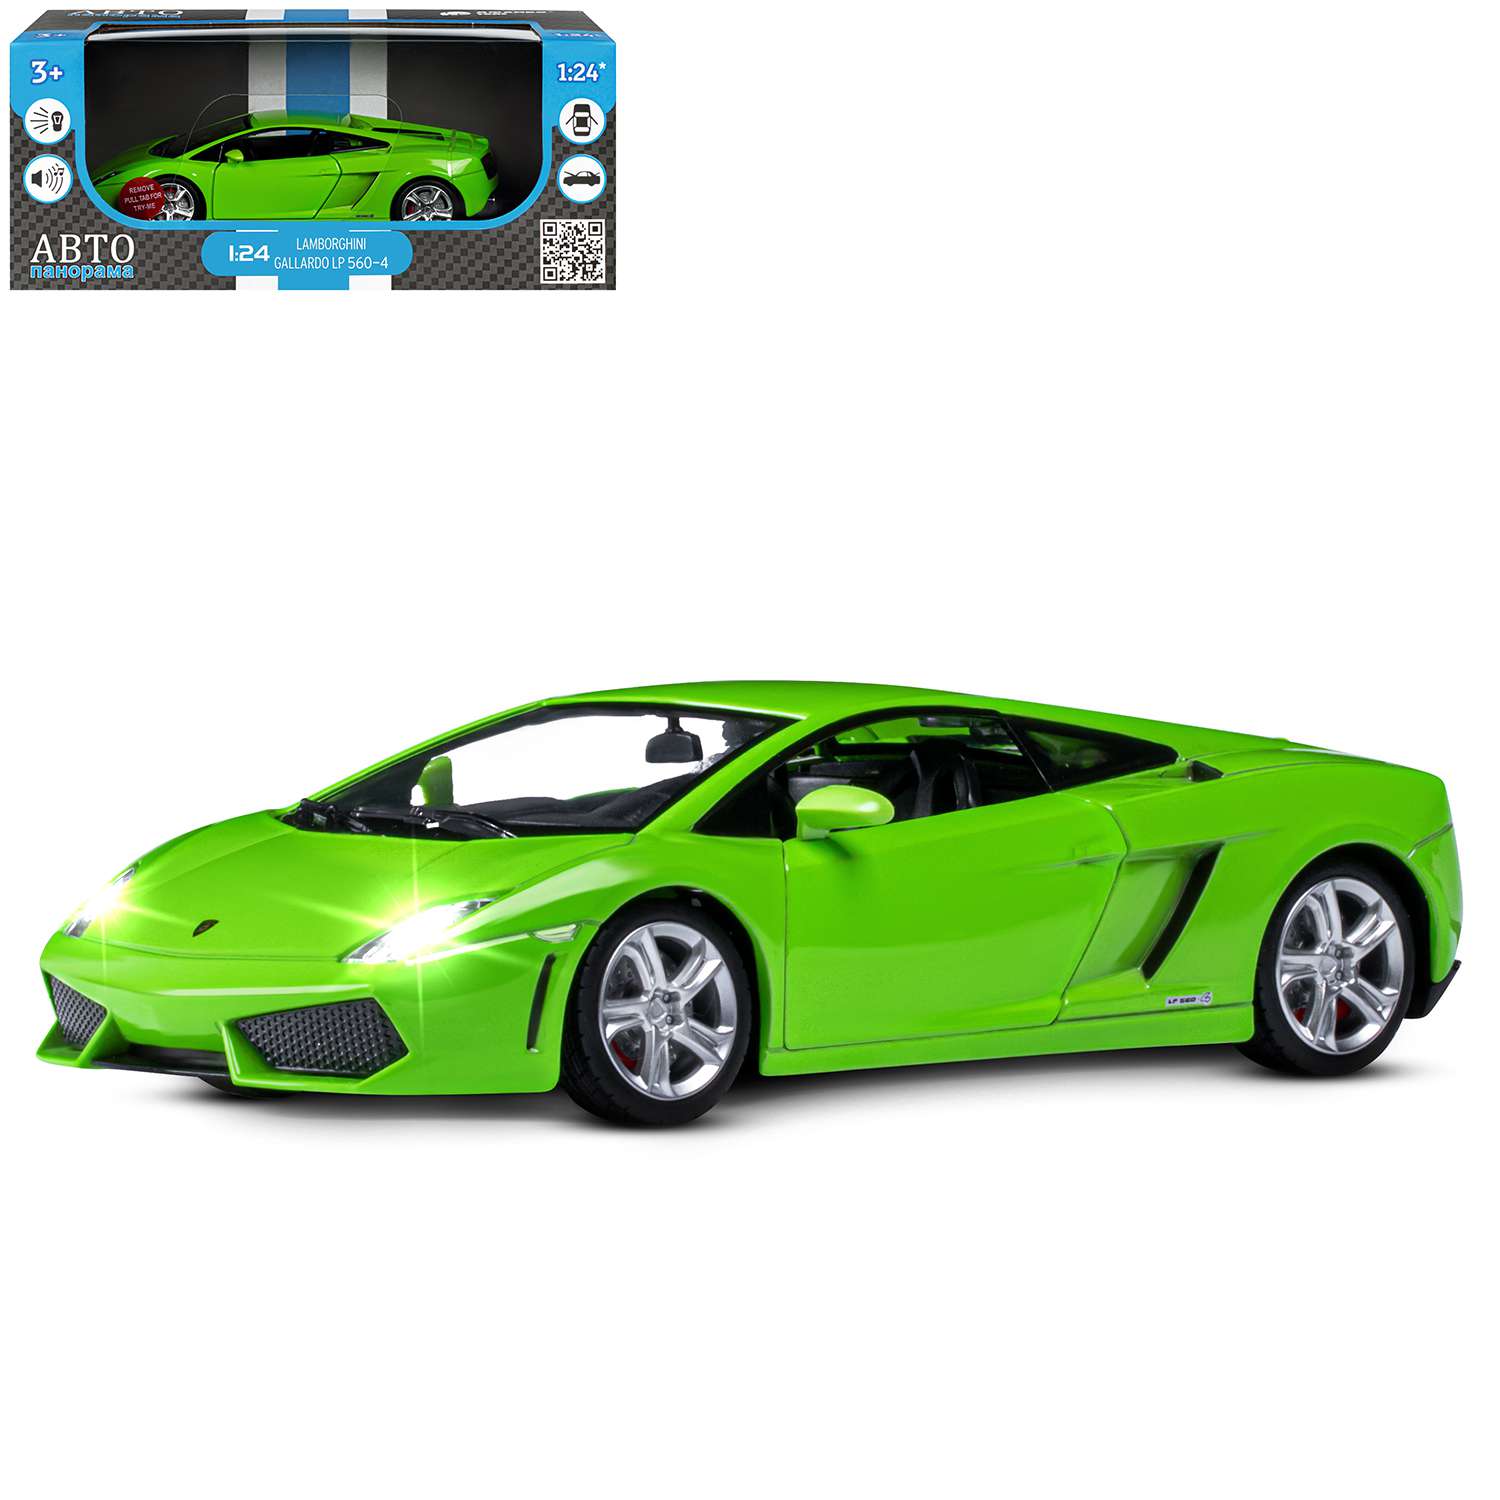 Машина JB1251382 Lamborghini Gallardo LP560-4 металл 1:24 зеленый свет, звук ТМ Автопанорама - Заинск 